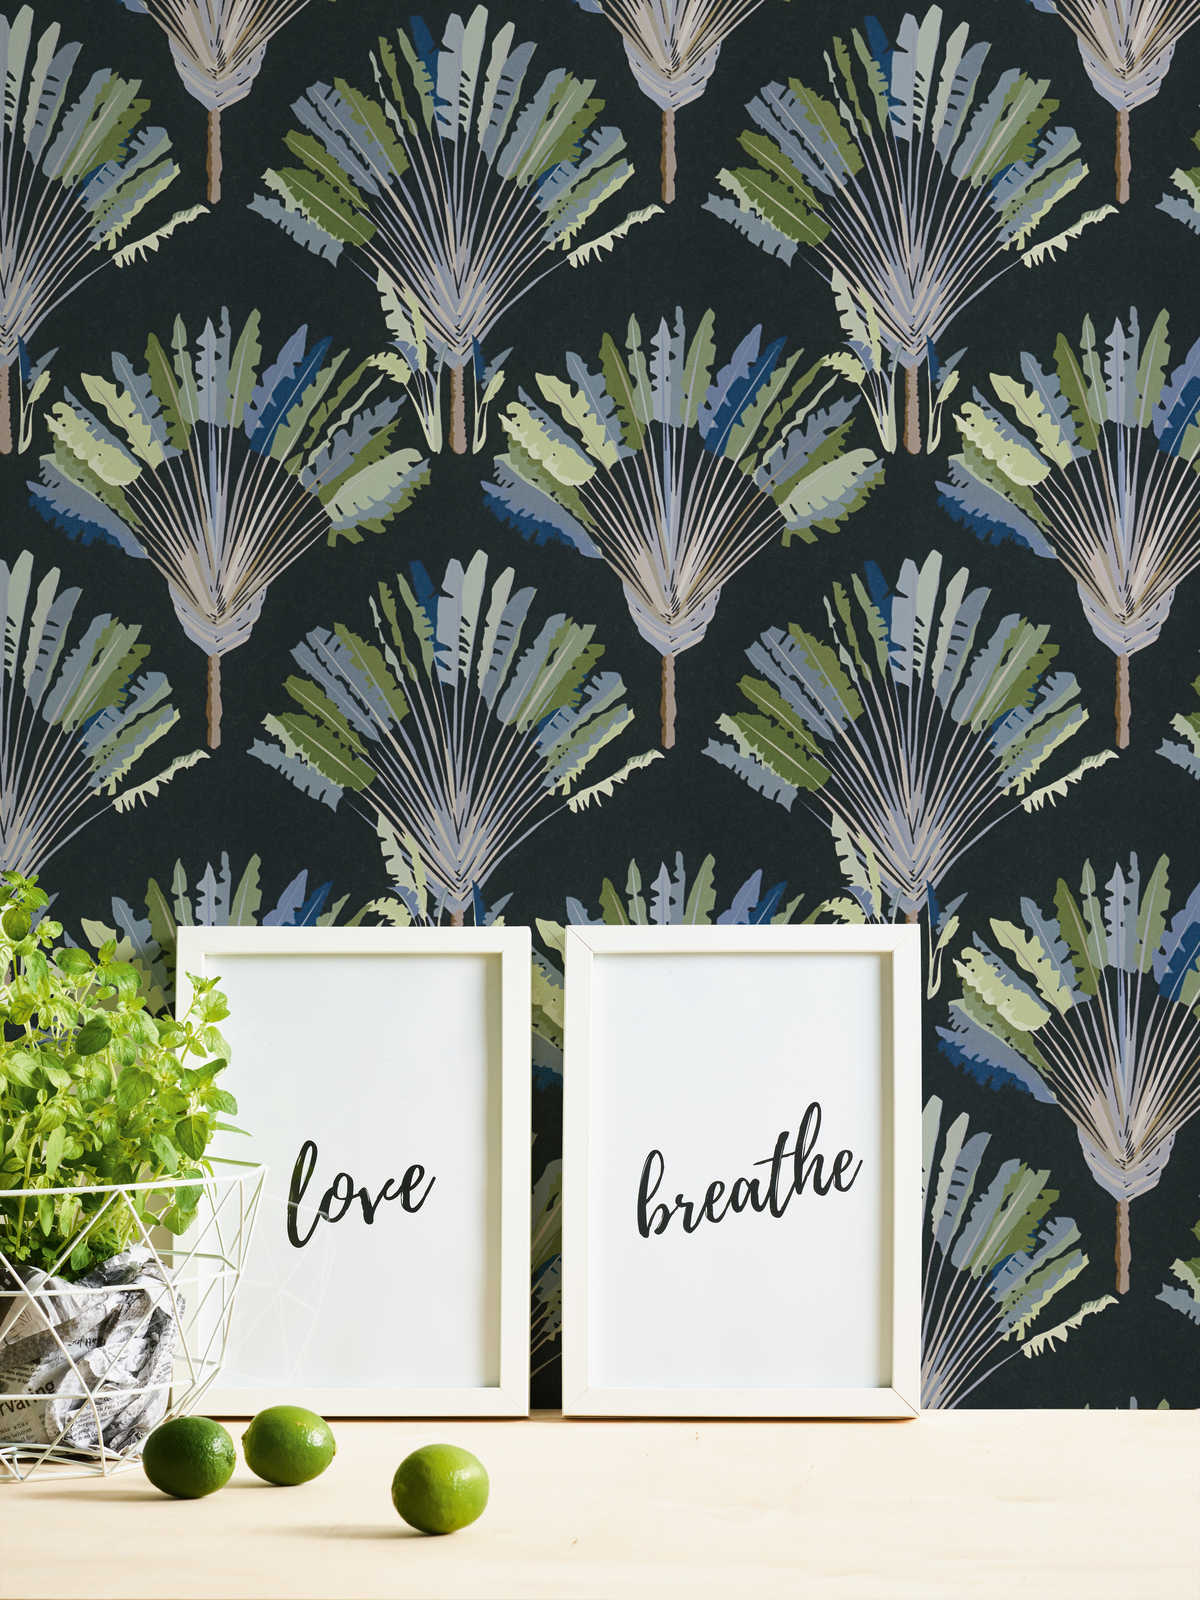             Dark wallpaper palm tree design with pattern print - green, black, blue
        